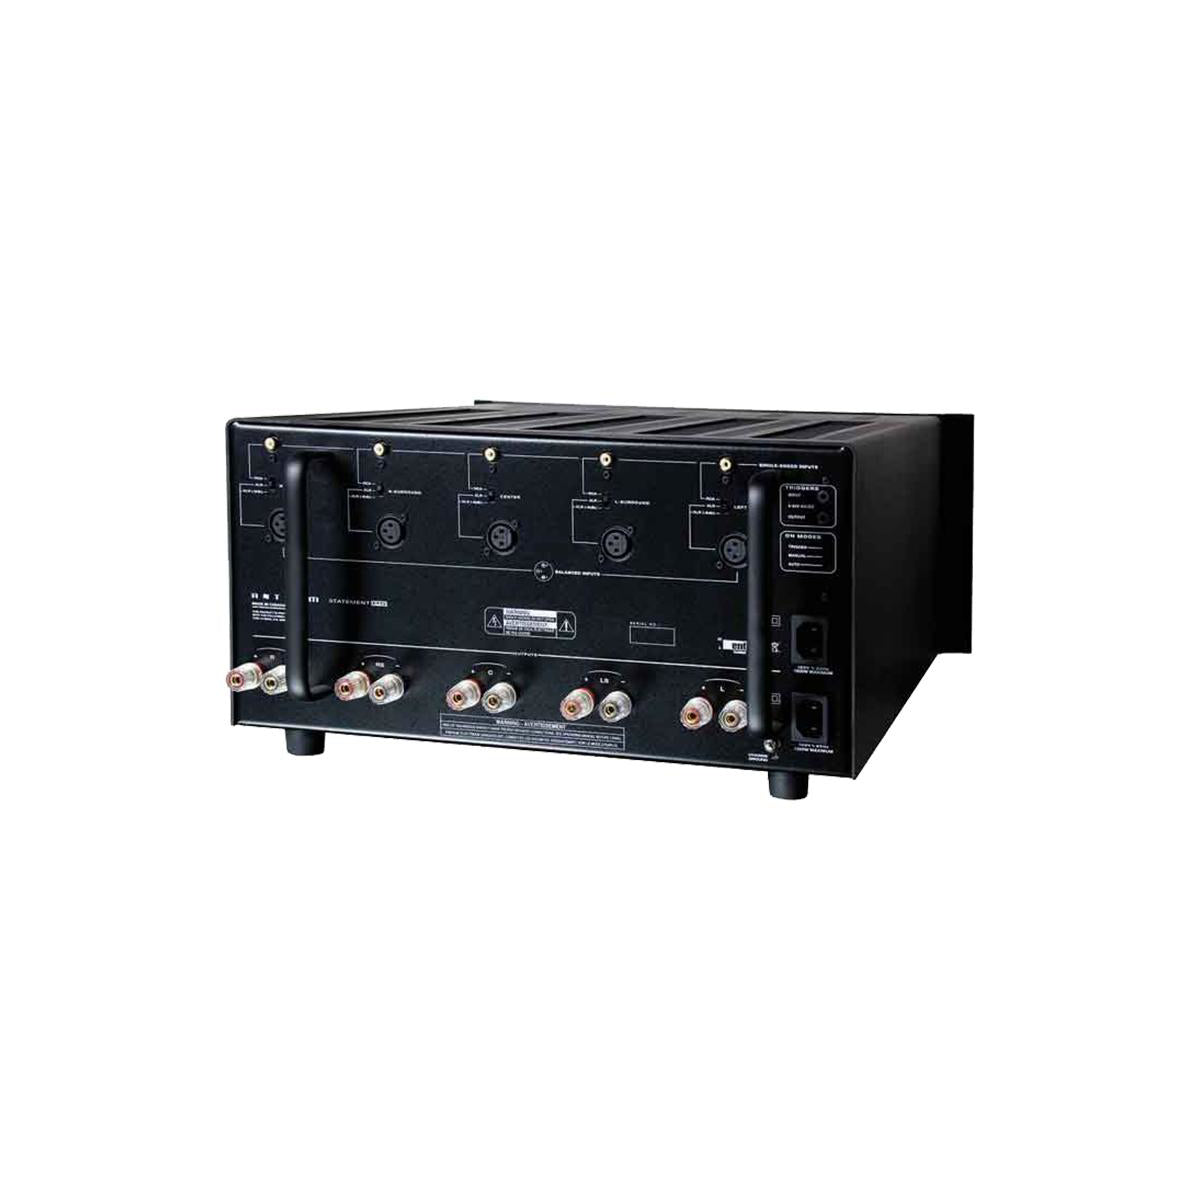 Anthem Statement P5 Multi-channel Power Amplifier - Black - The Audio Experts